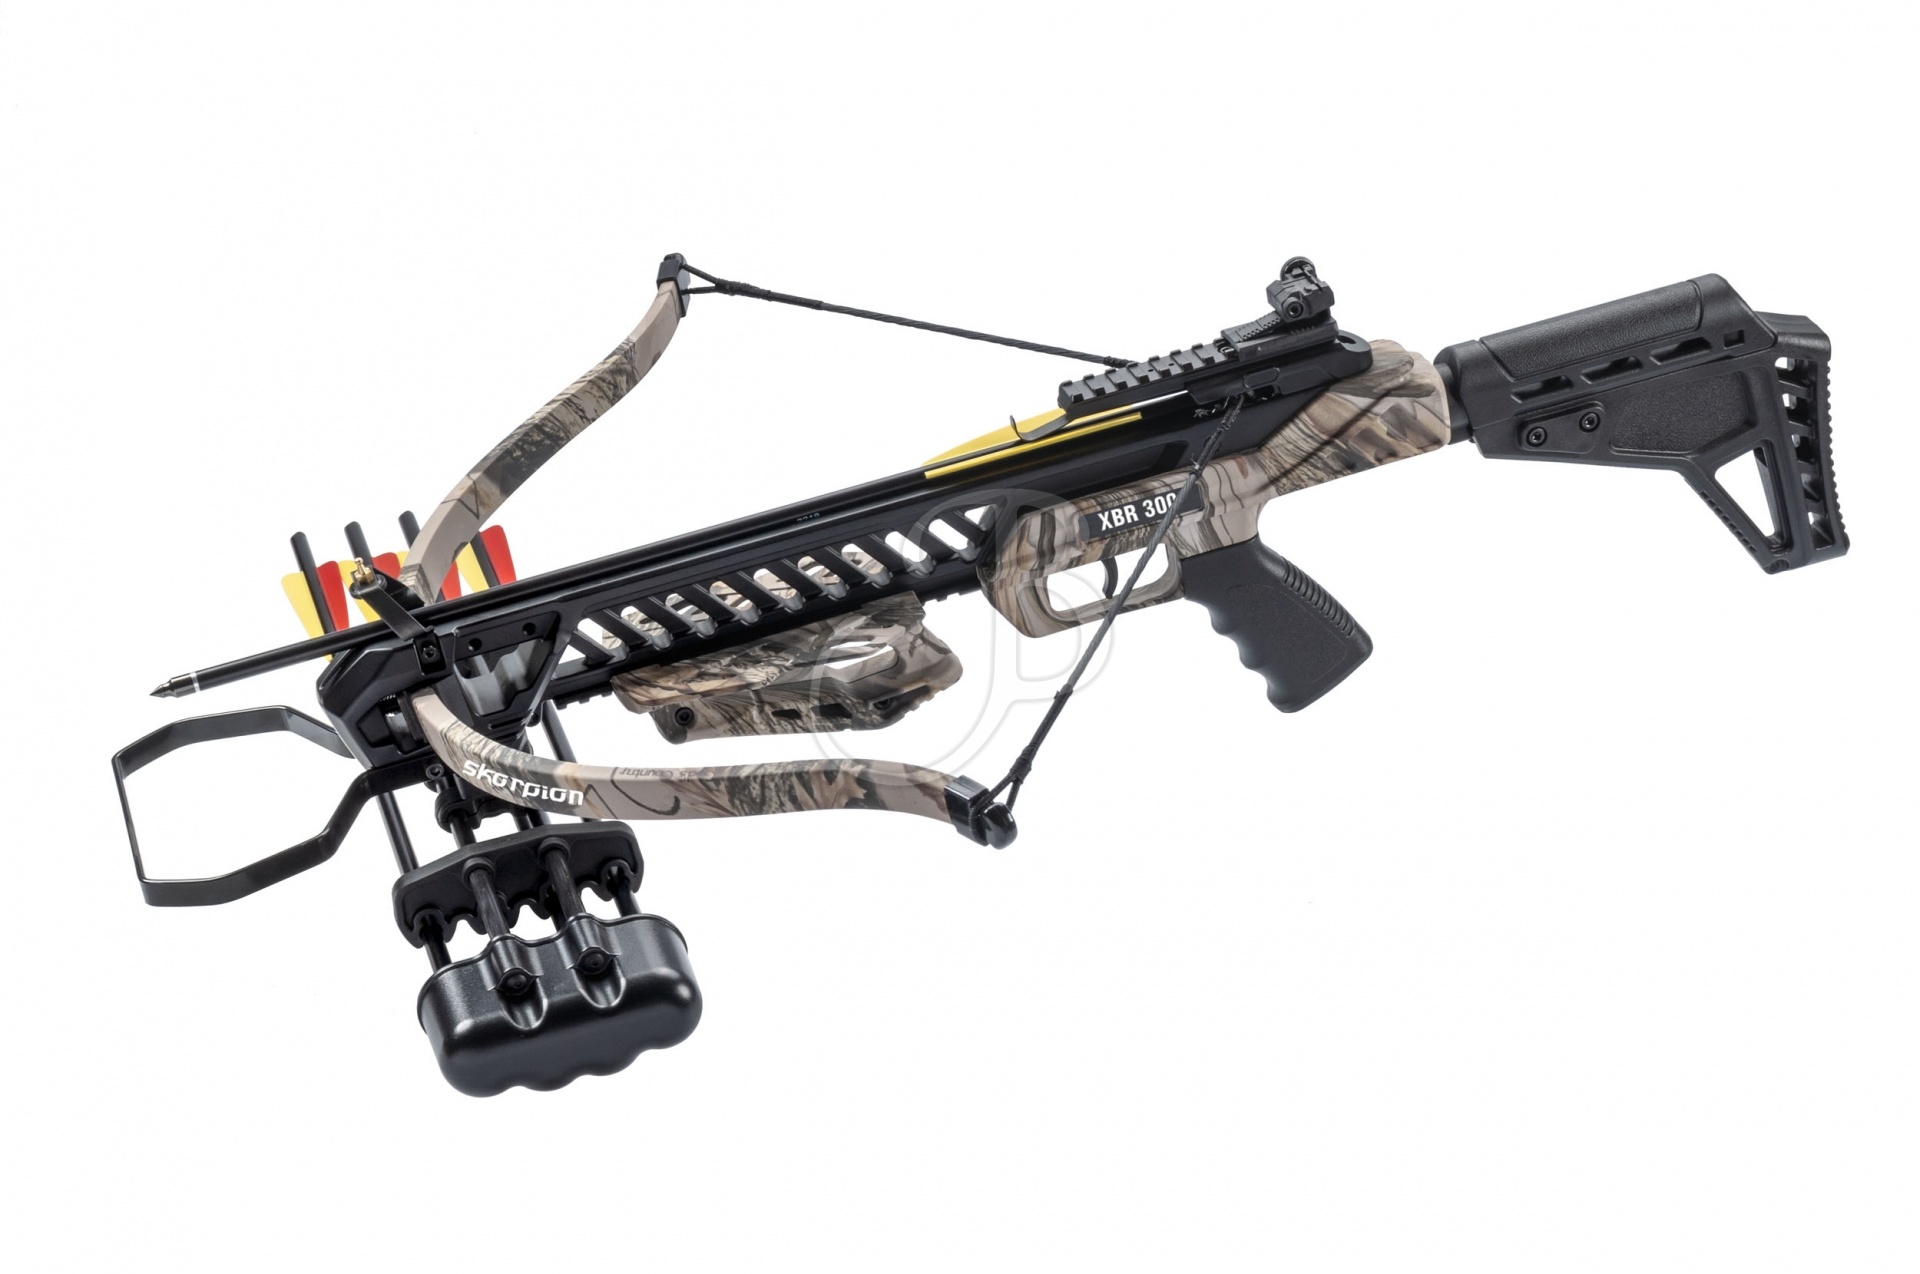 Skorpion Ensemble Pistol Crossbow XBR 300 - Camo